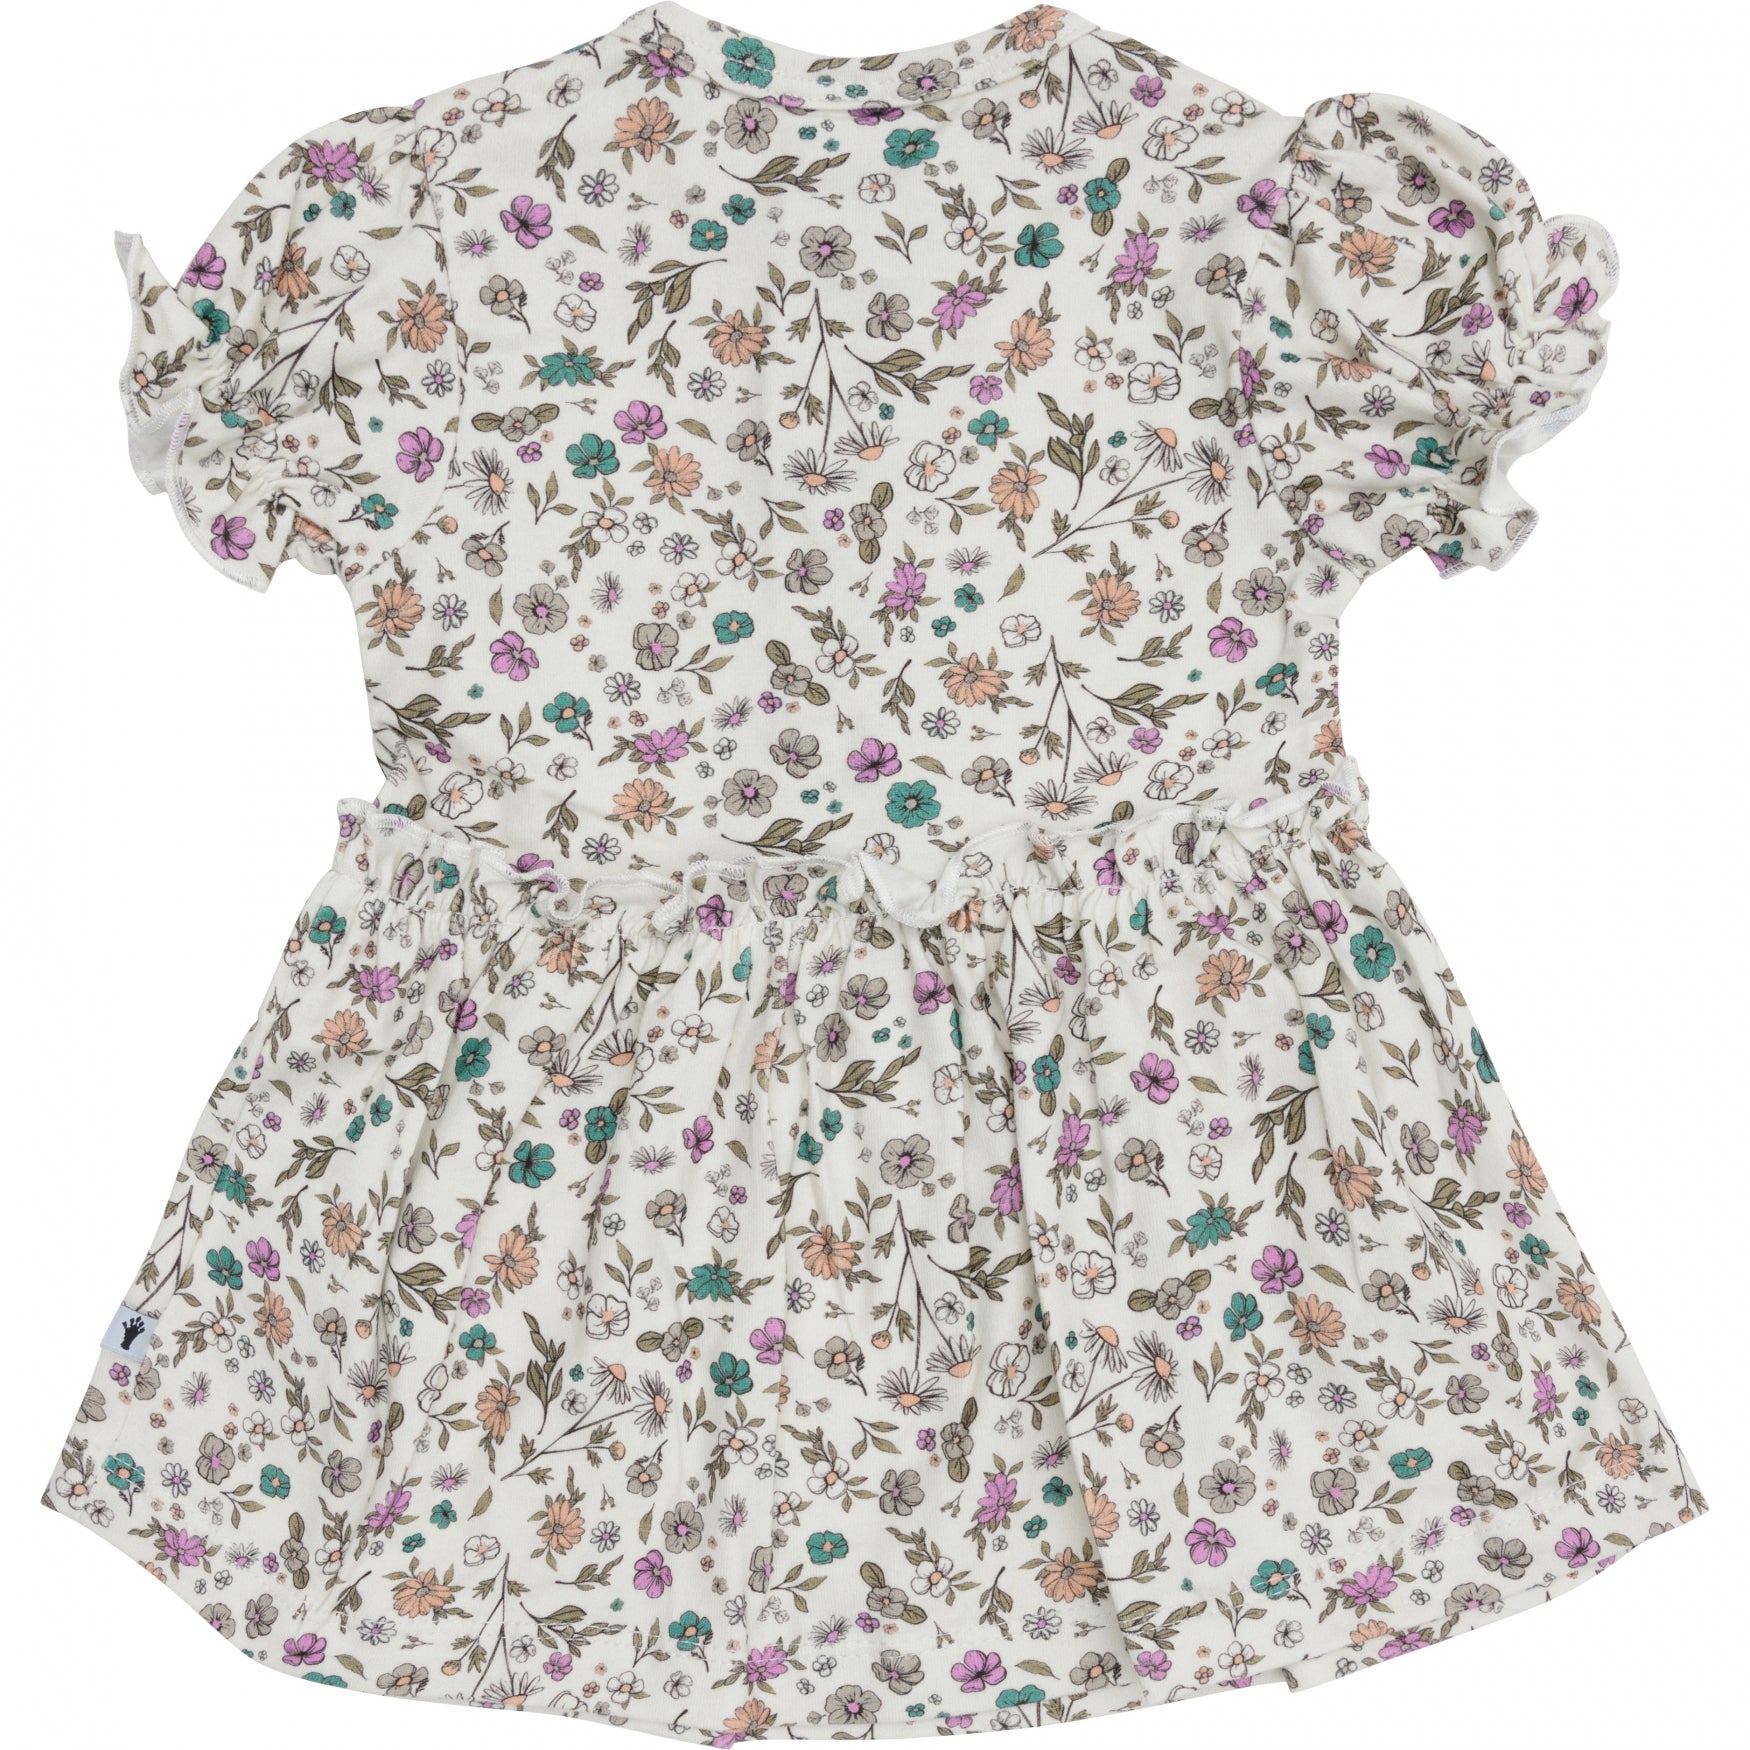 Meisjes Dress Ruffle Shortsleeve van Klein Baby in de kleur AOP Flower SS24 in maat 74.